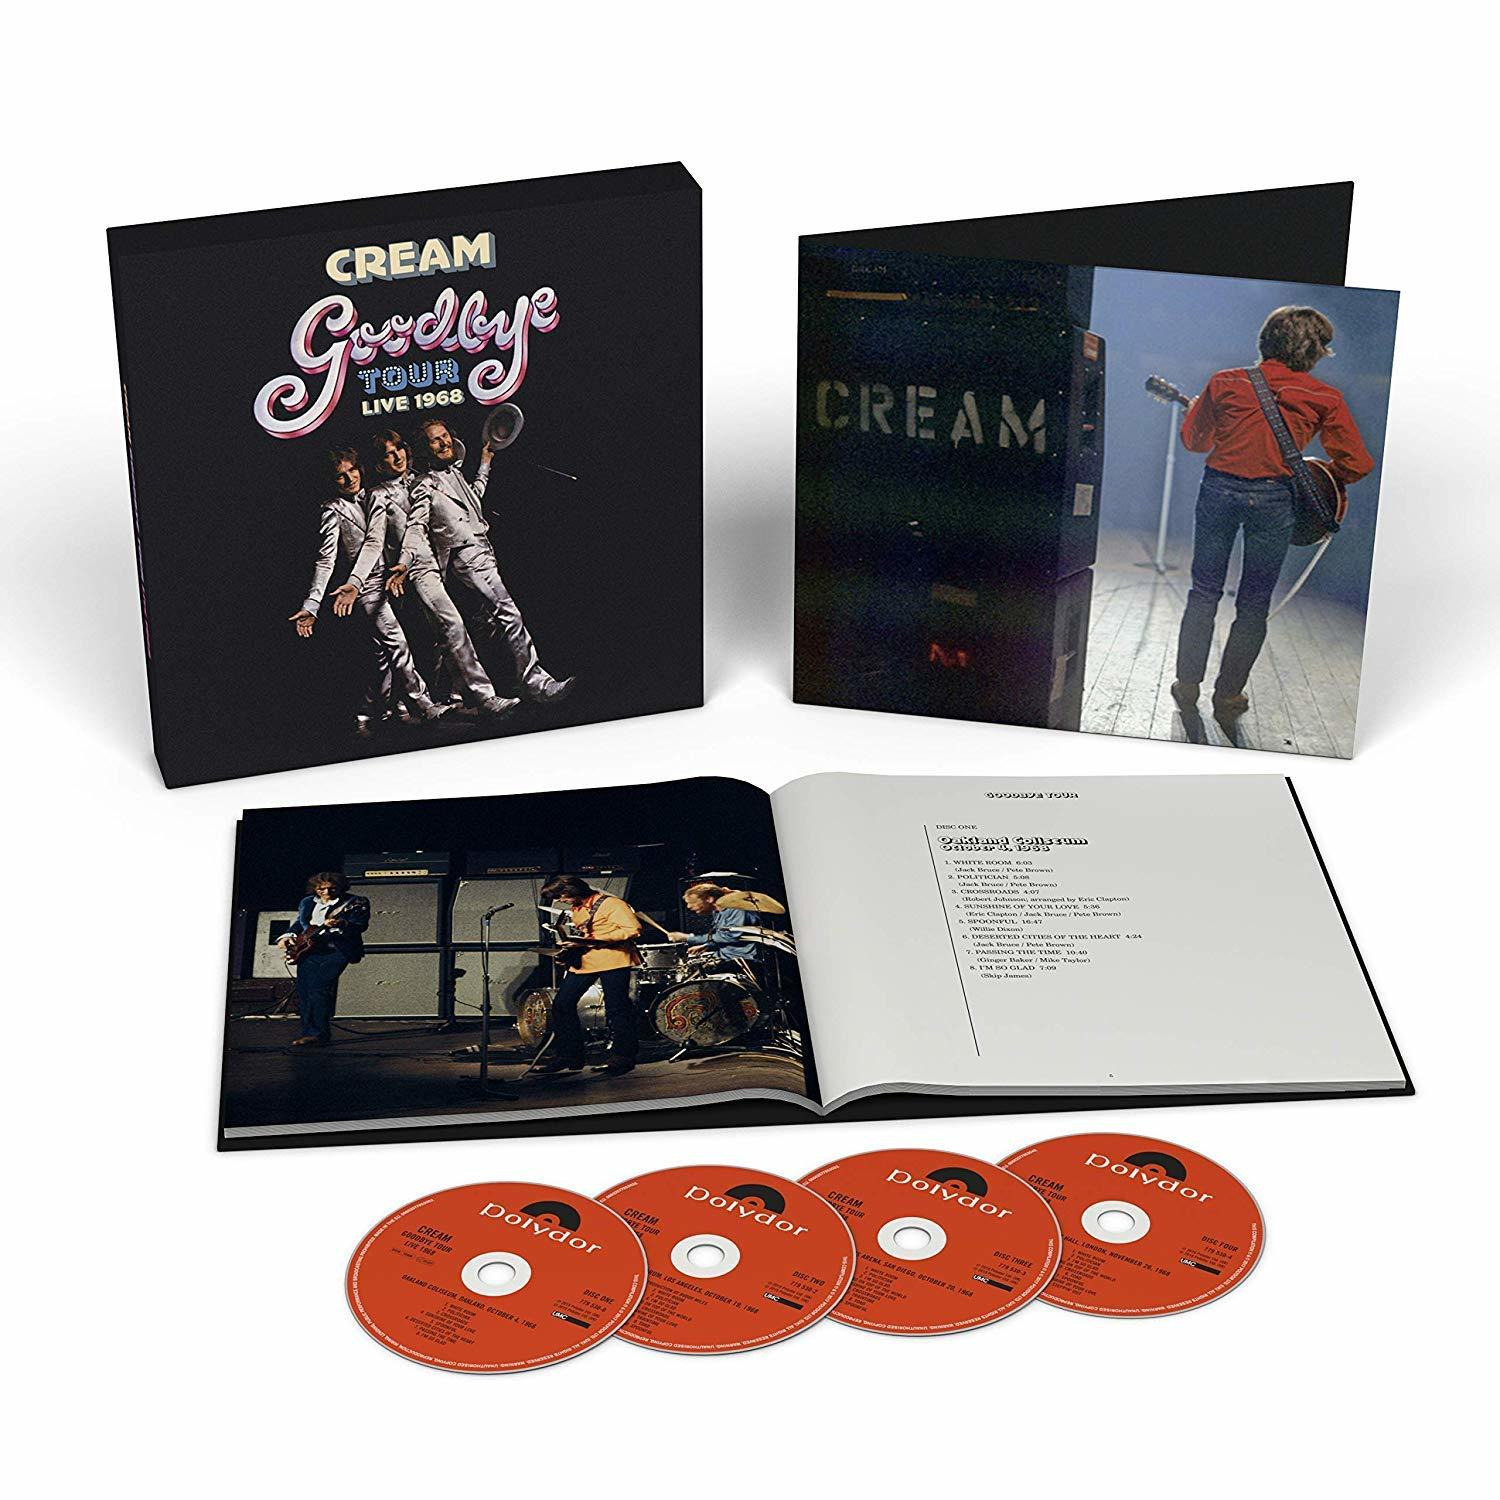 Cream - Goodbye Tour - 1968 (CD) - Live